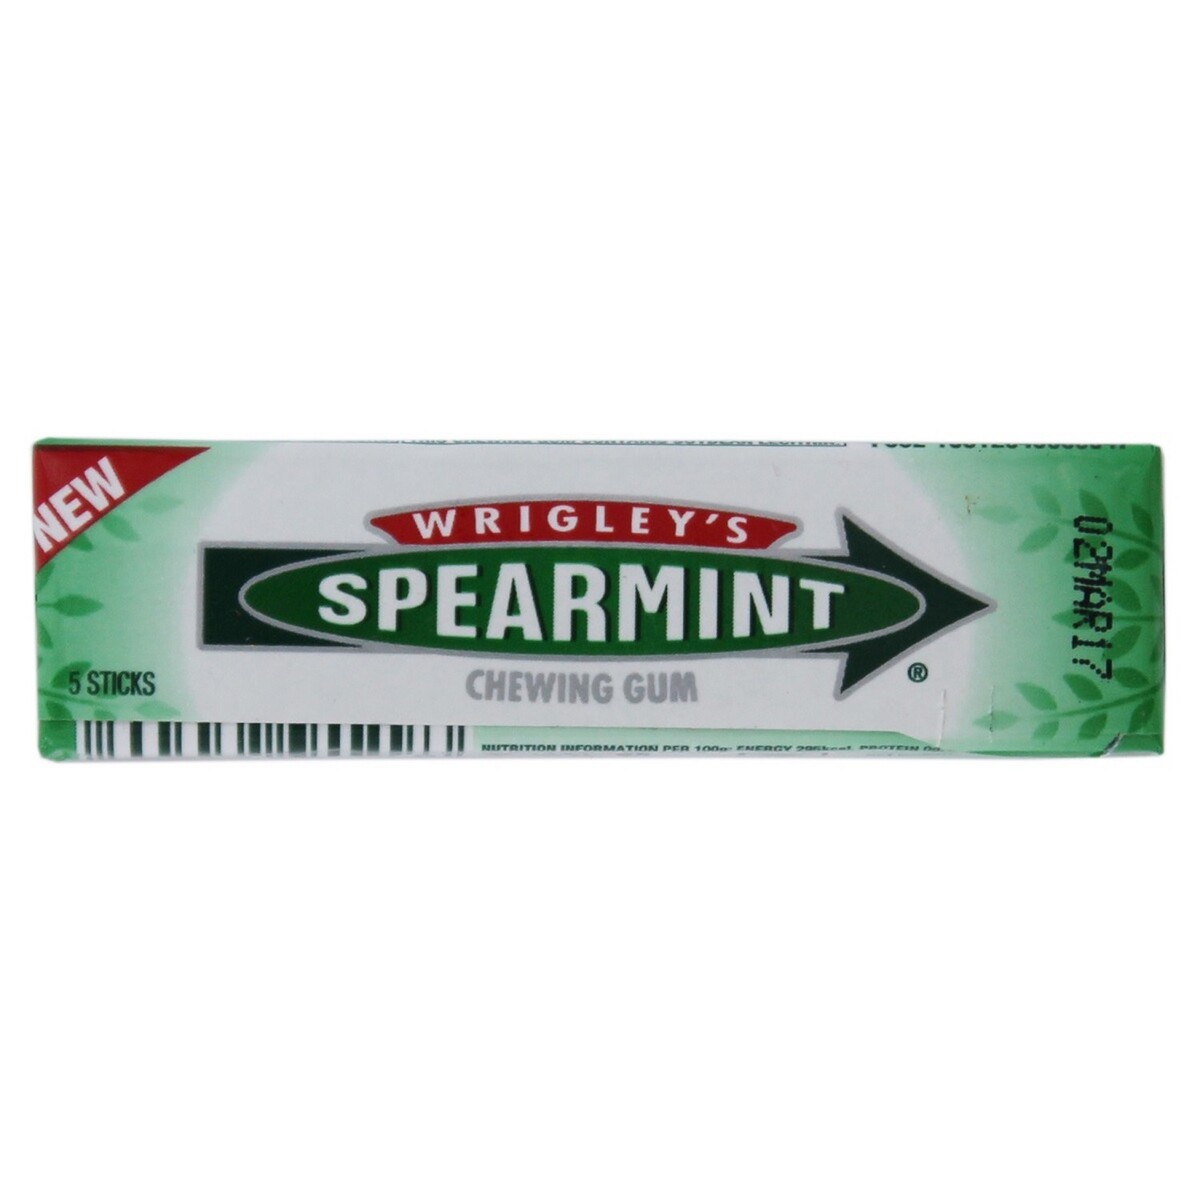 Wrigley's Chewing Gum Spearmint 5 Stick